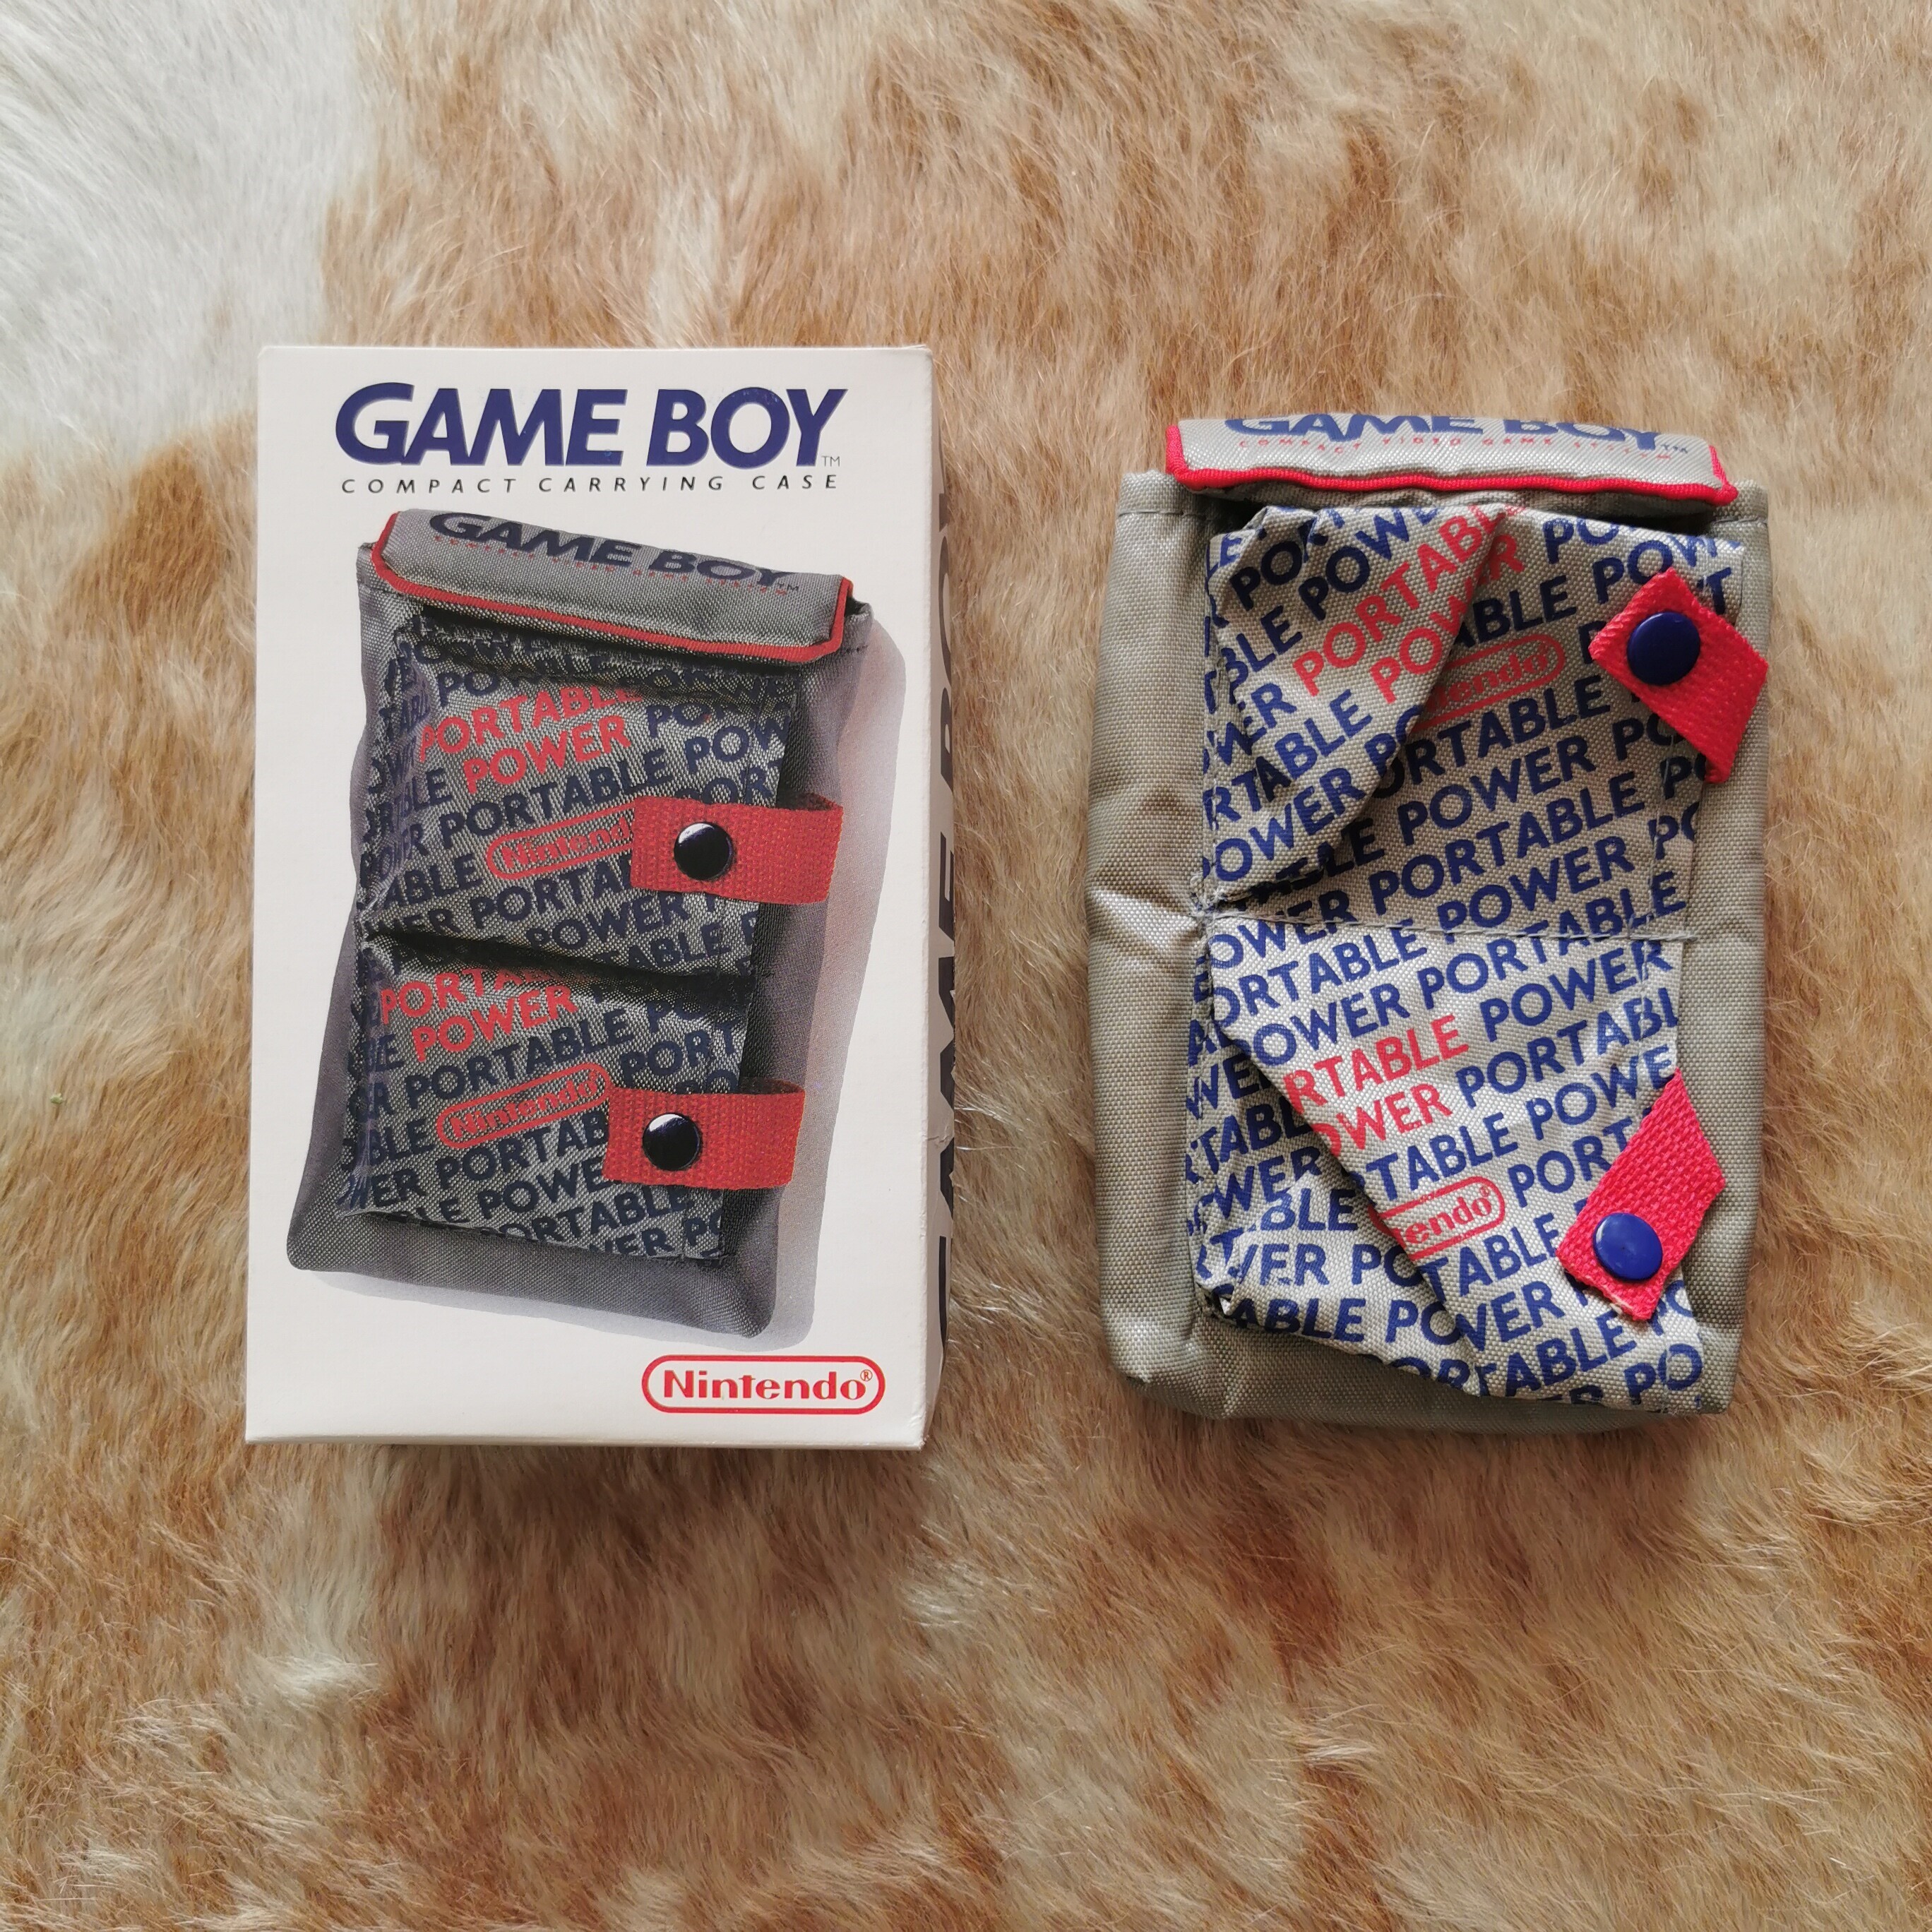  Nintendo Game Boy Nintendo Game Boy Compact Carrying Case - Special Edition [US]